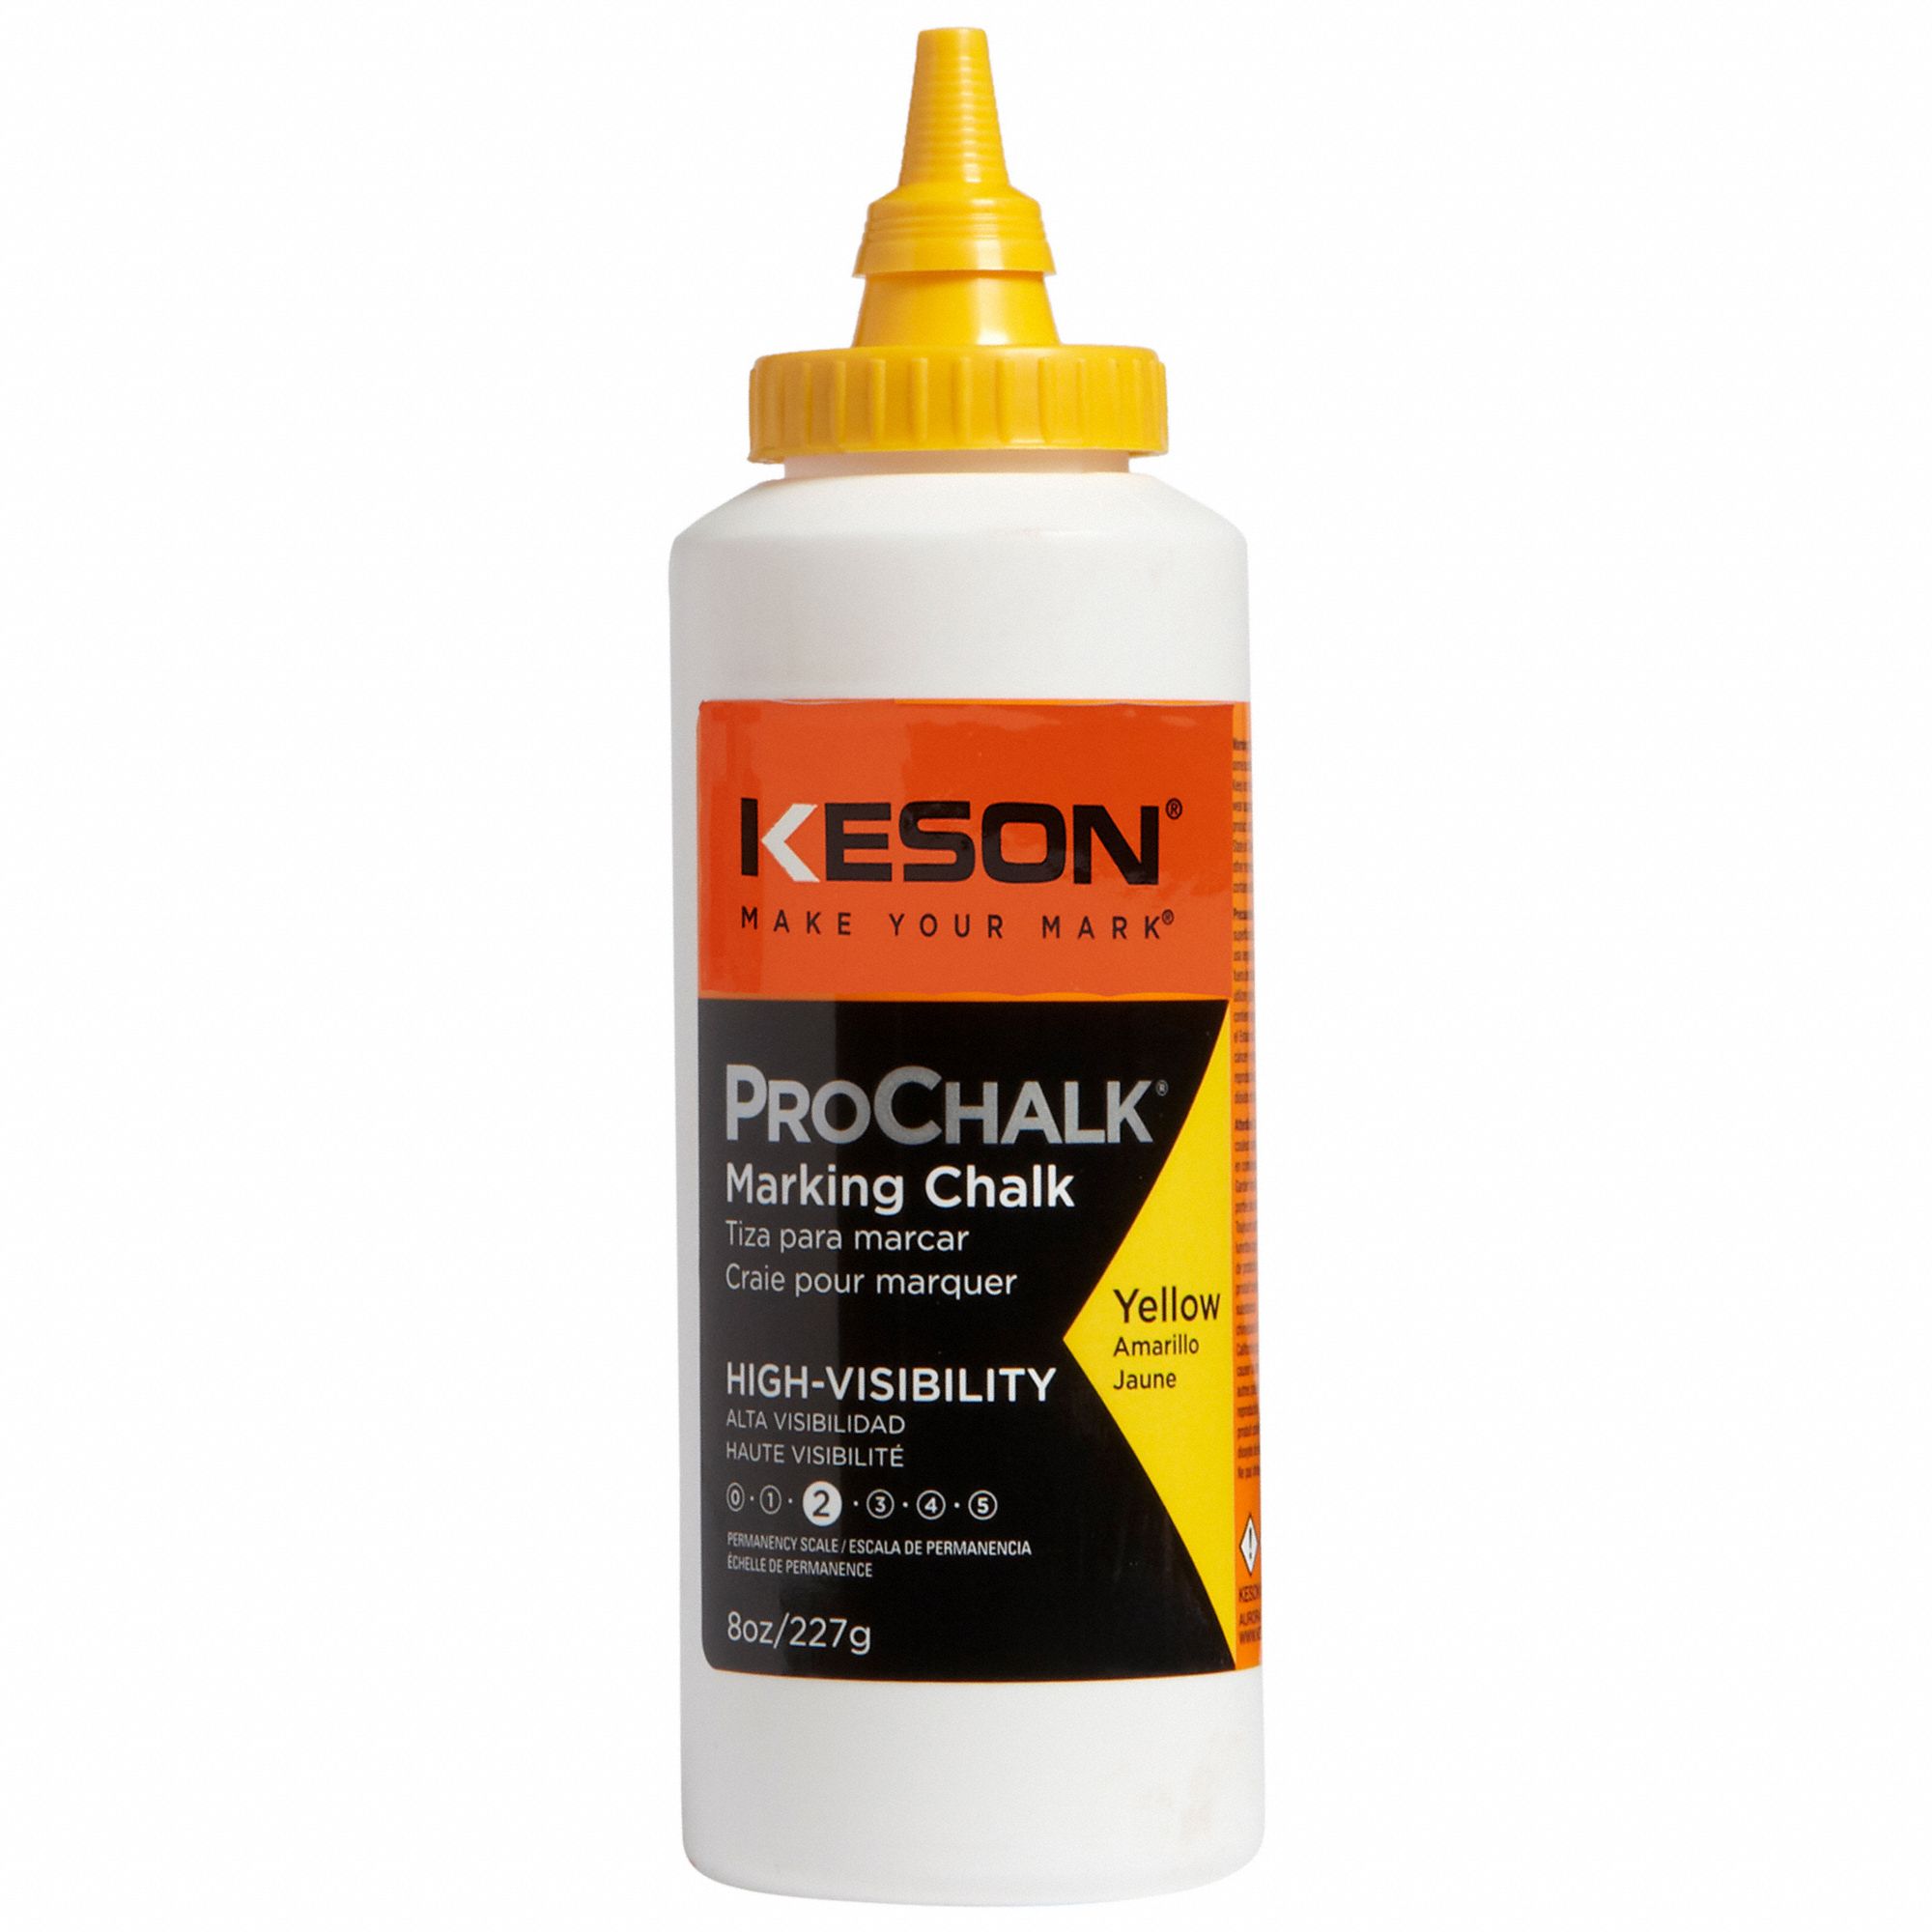 KESON MARKING CHALK REFILL,YELLOW,8 OZ - Marking Chalk and Refills -  WWG4MHF8